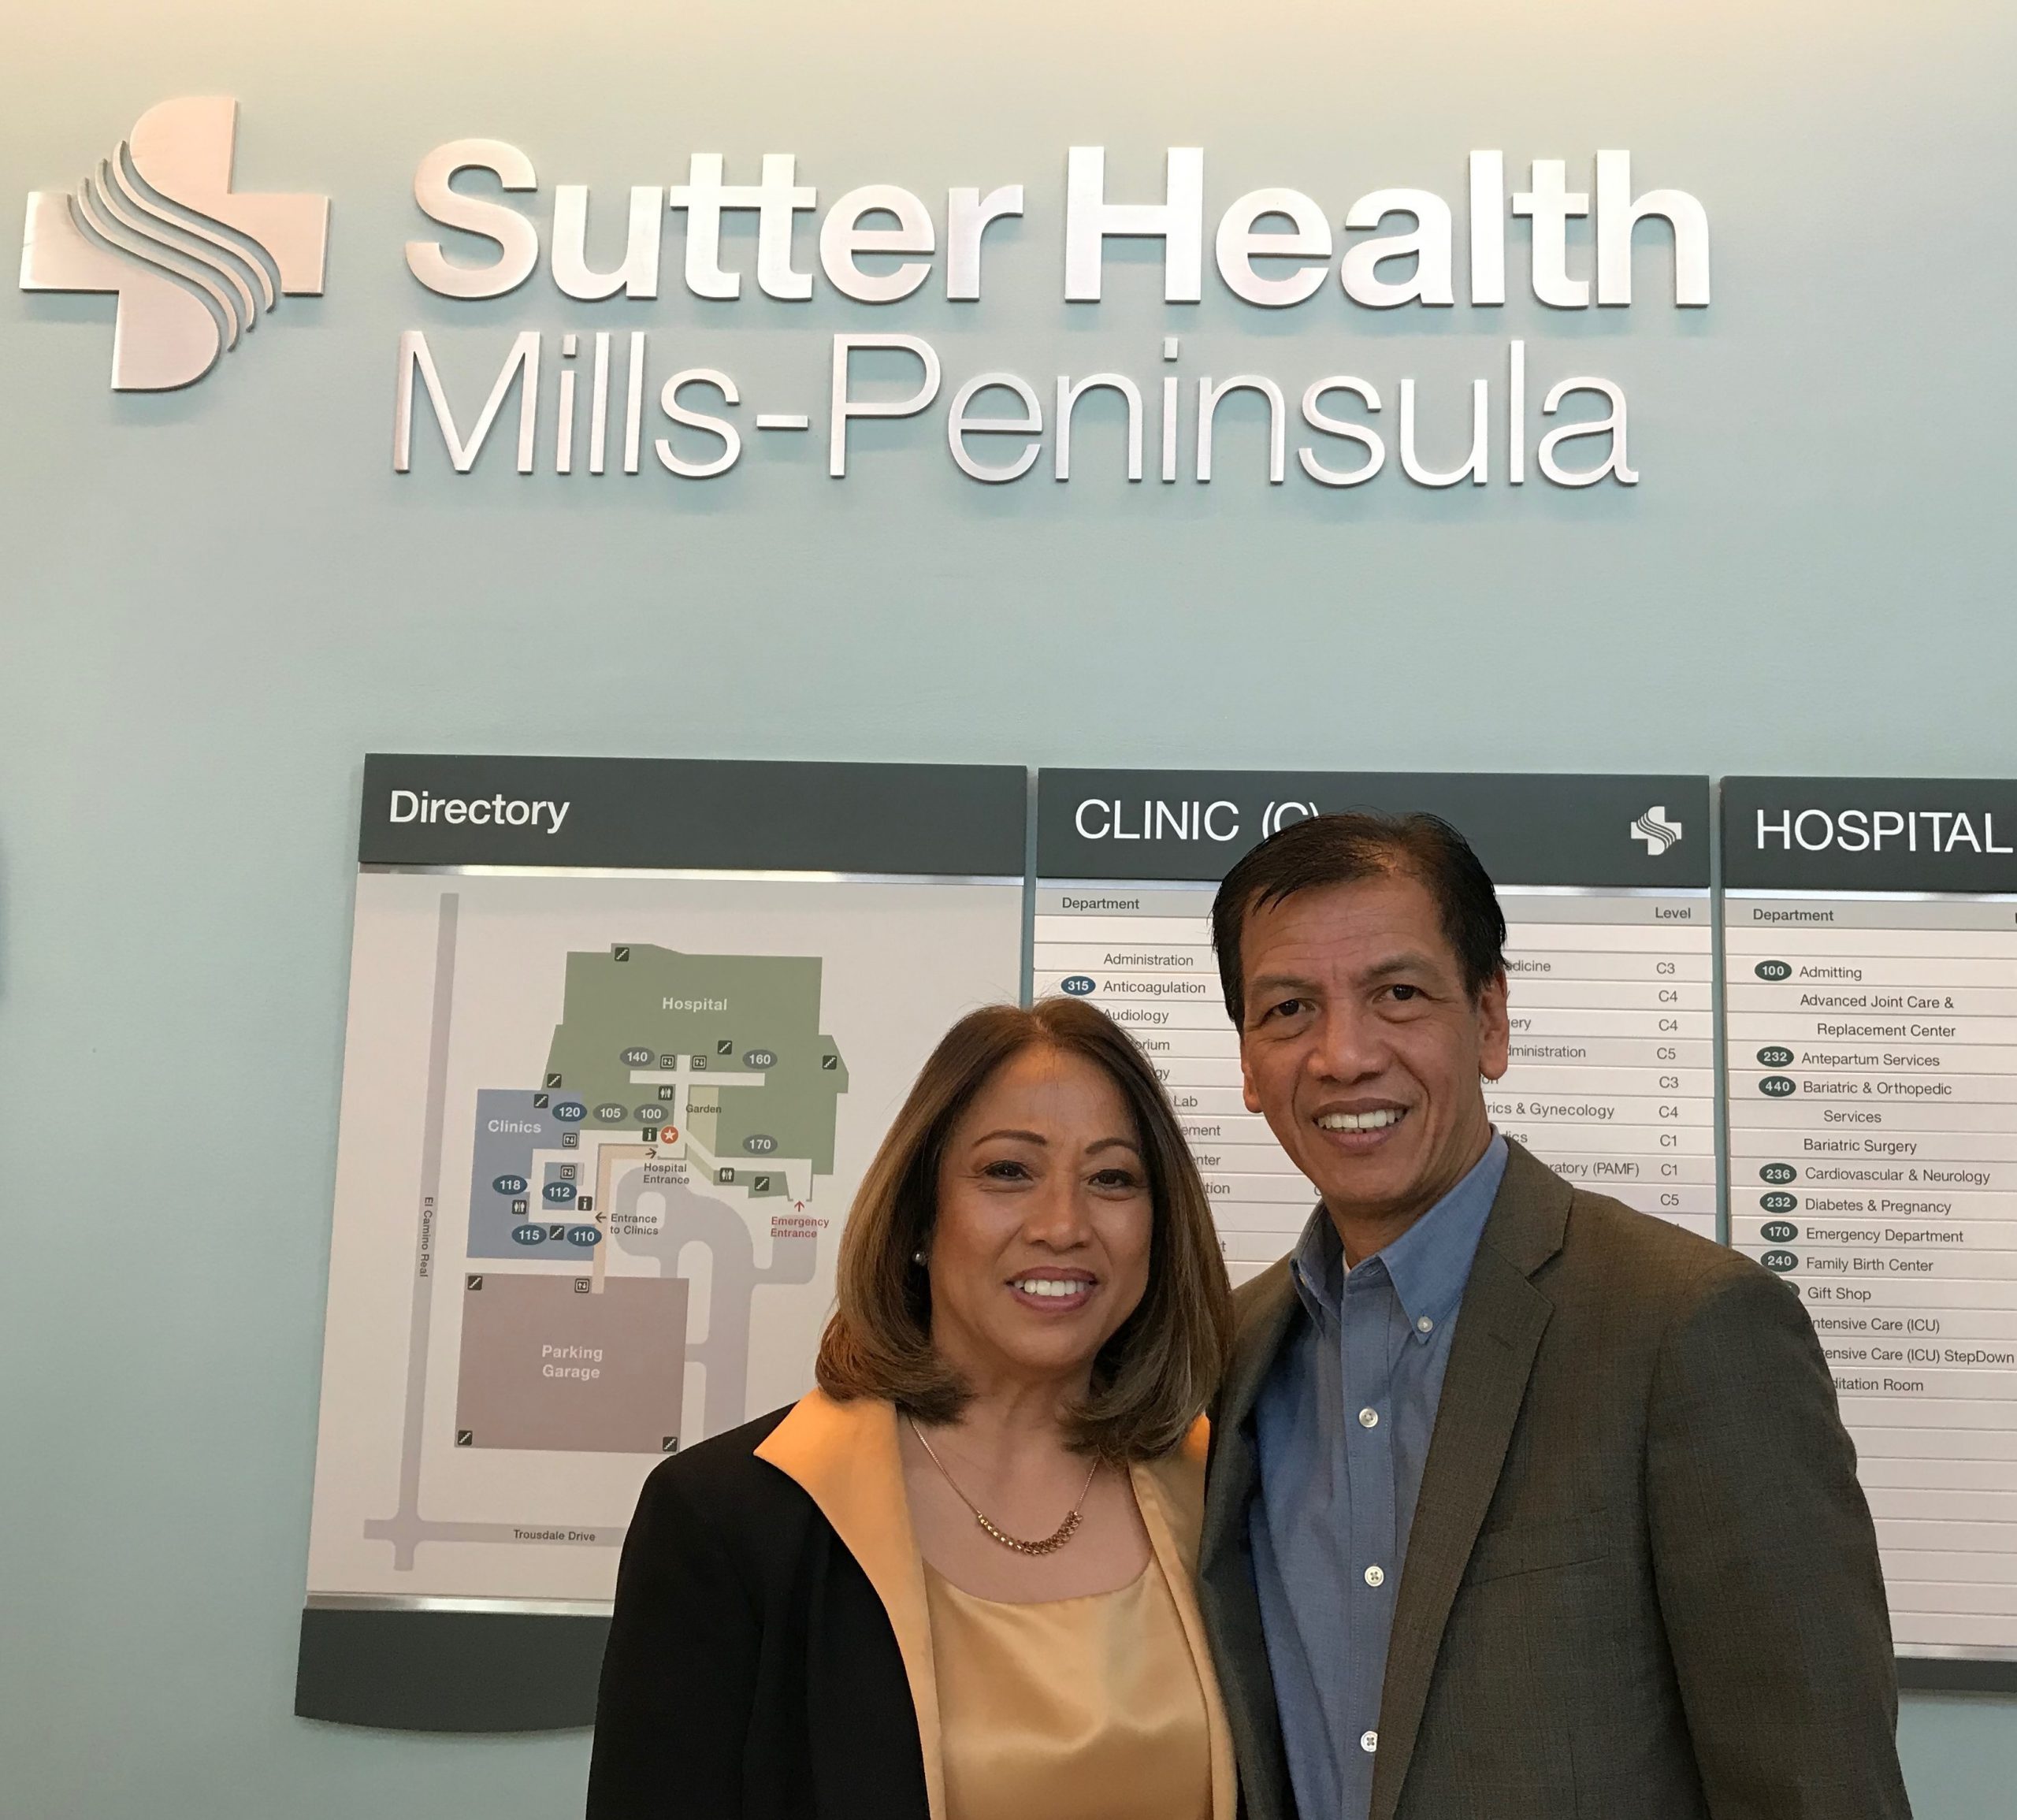 Wife and stroke survivor husband under sign for Sutter Health Mills-Peninsula.